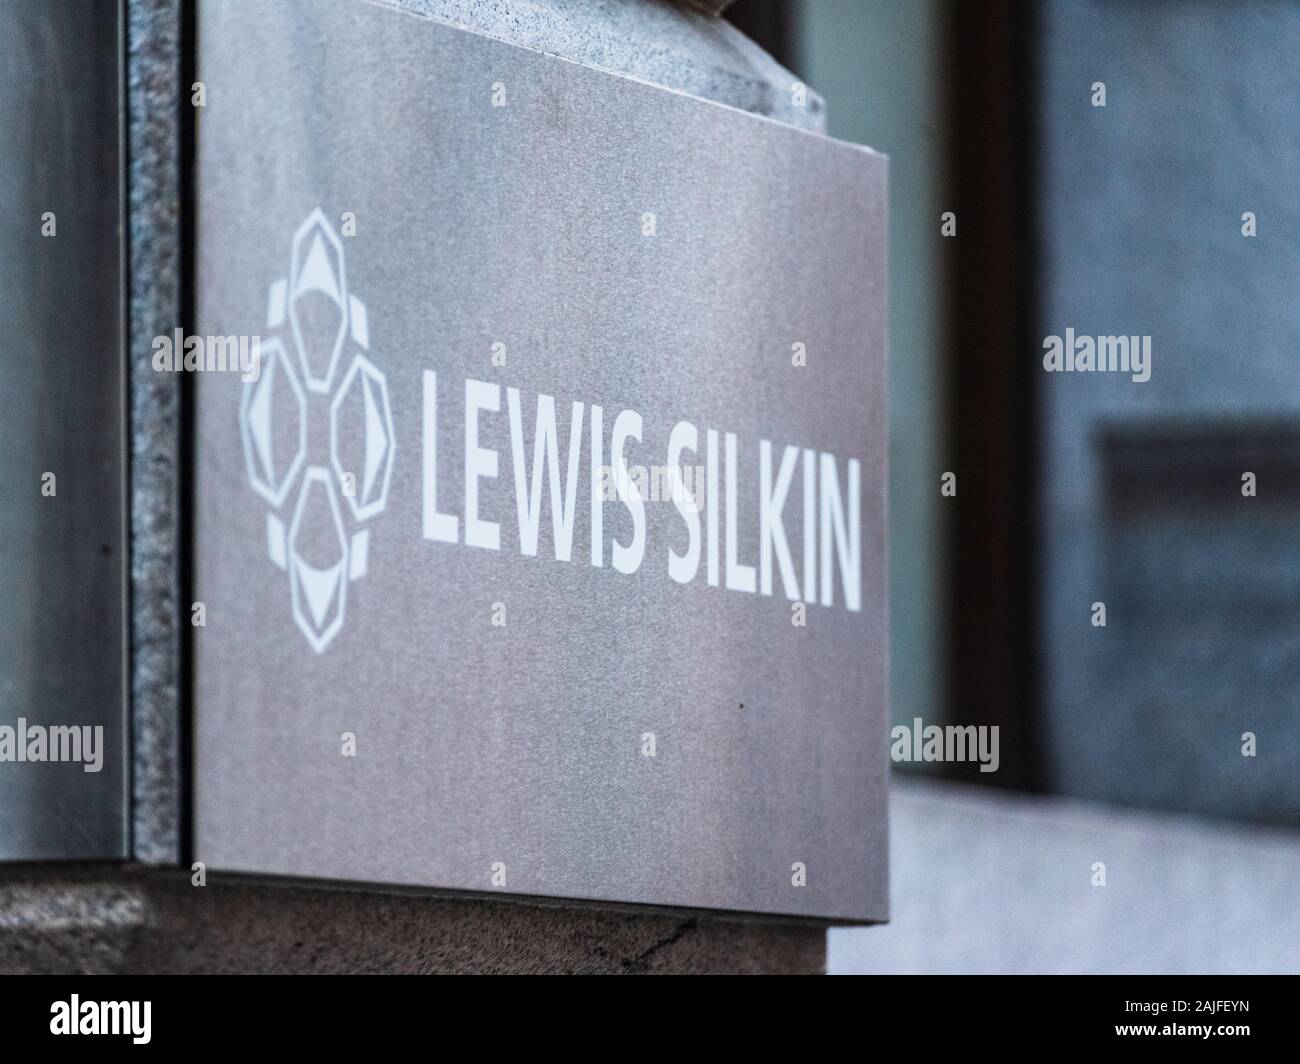 Lewis Silkin London Law Firm. Lewis Silkin LLP 5 Chancery Lane Londra. Fondata nel 1950. Foto Stock